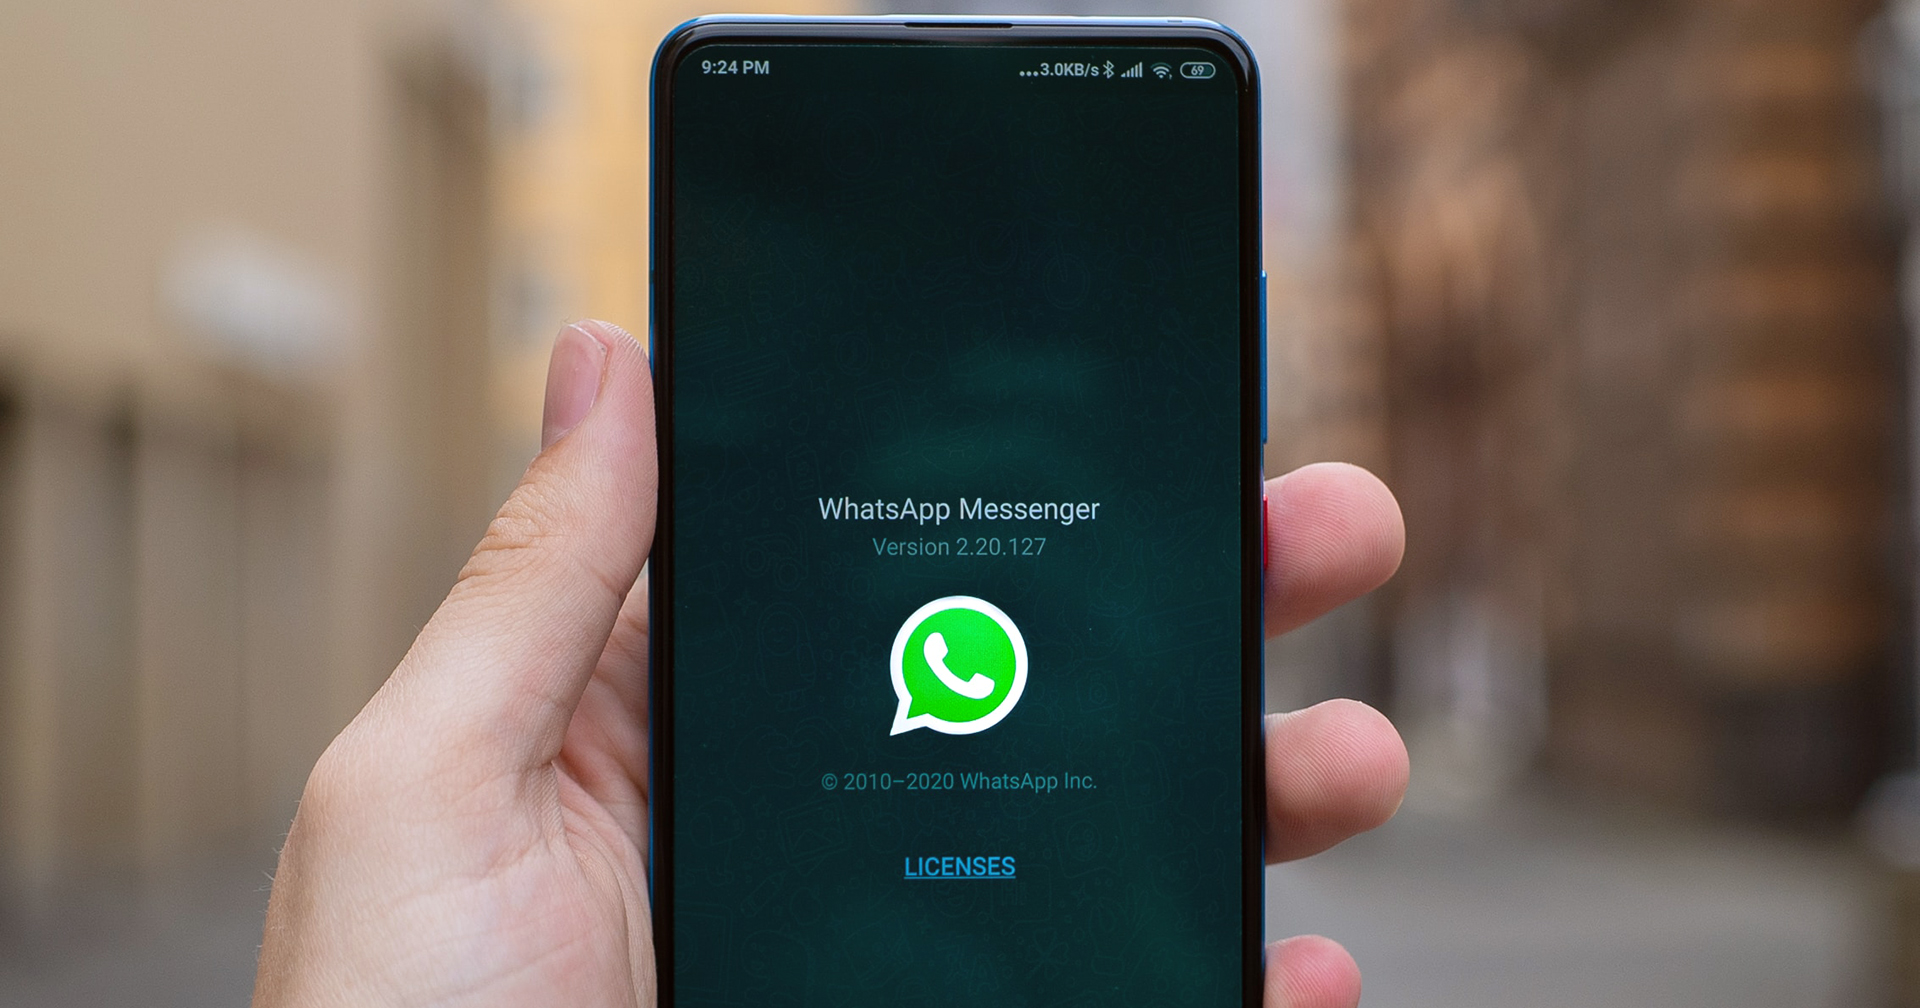 WhatsApp เปิดให้ล็อกอินในสมาร์ตโฟน 5 เครื่อง ได้พร้อมกัน พร้อมป้องกันความปลอดภัยสูงสุด